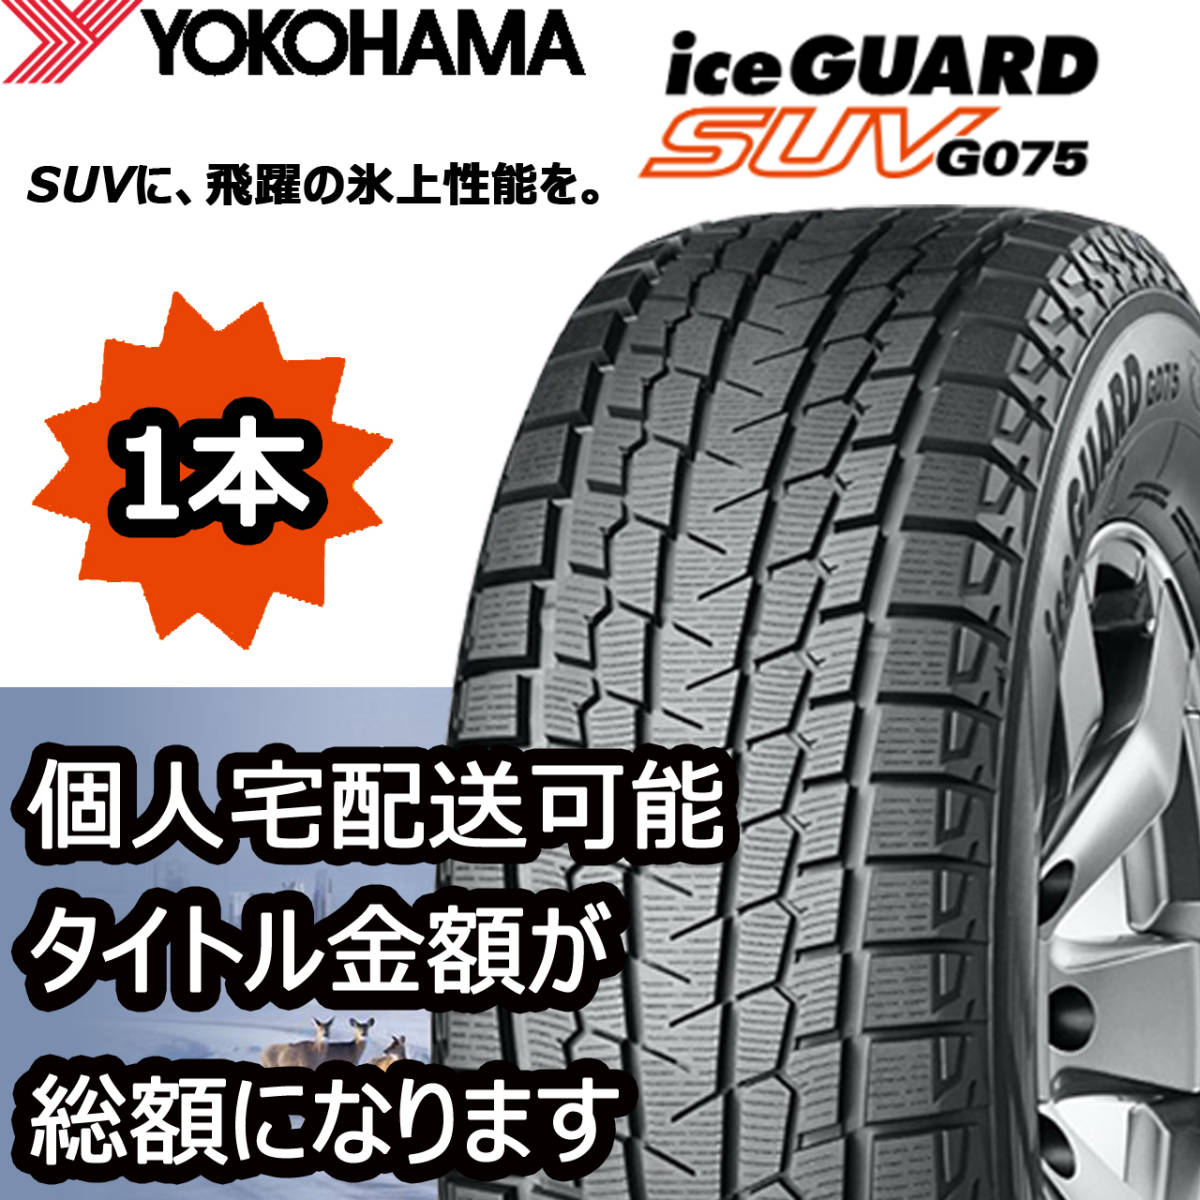 YOKOHAMA iceGUARD SUV G075(ヨコハマ アイスガード SUV G075) 235 